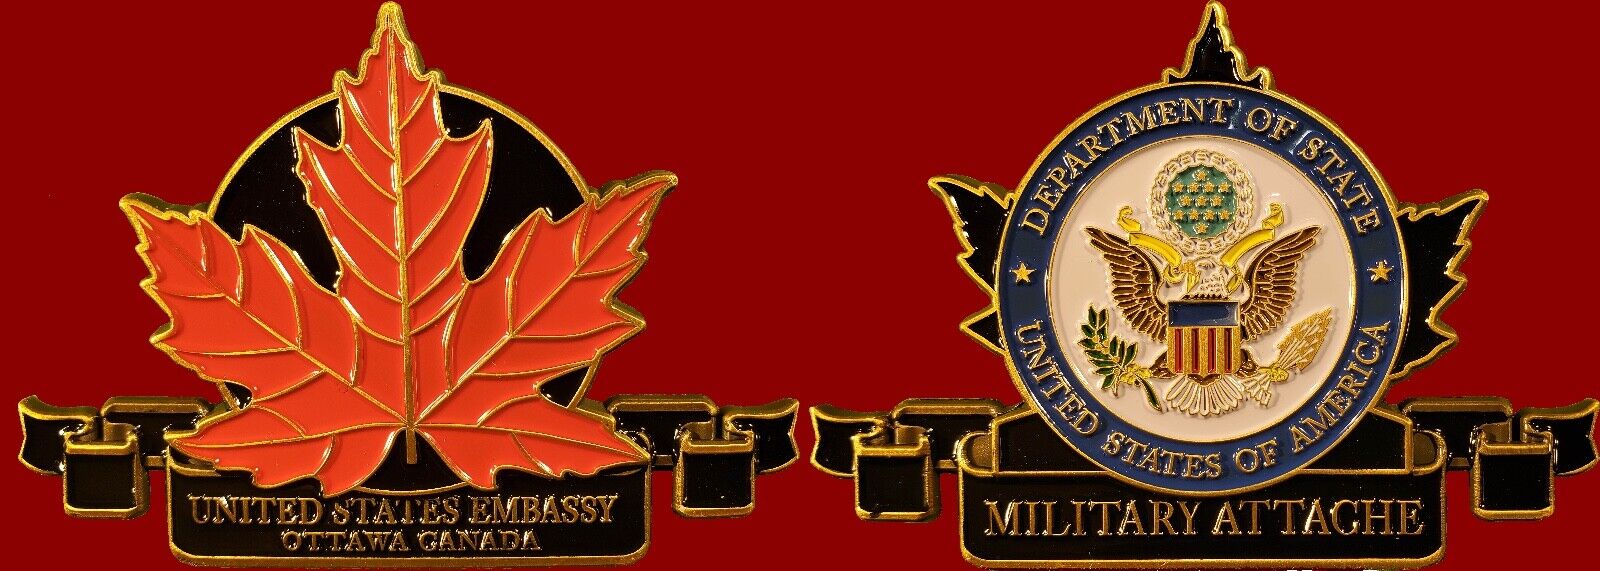 US EMBASSY OTTAWA CANADA MILITARY ATTACHE  CHALLENGE COIN 2